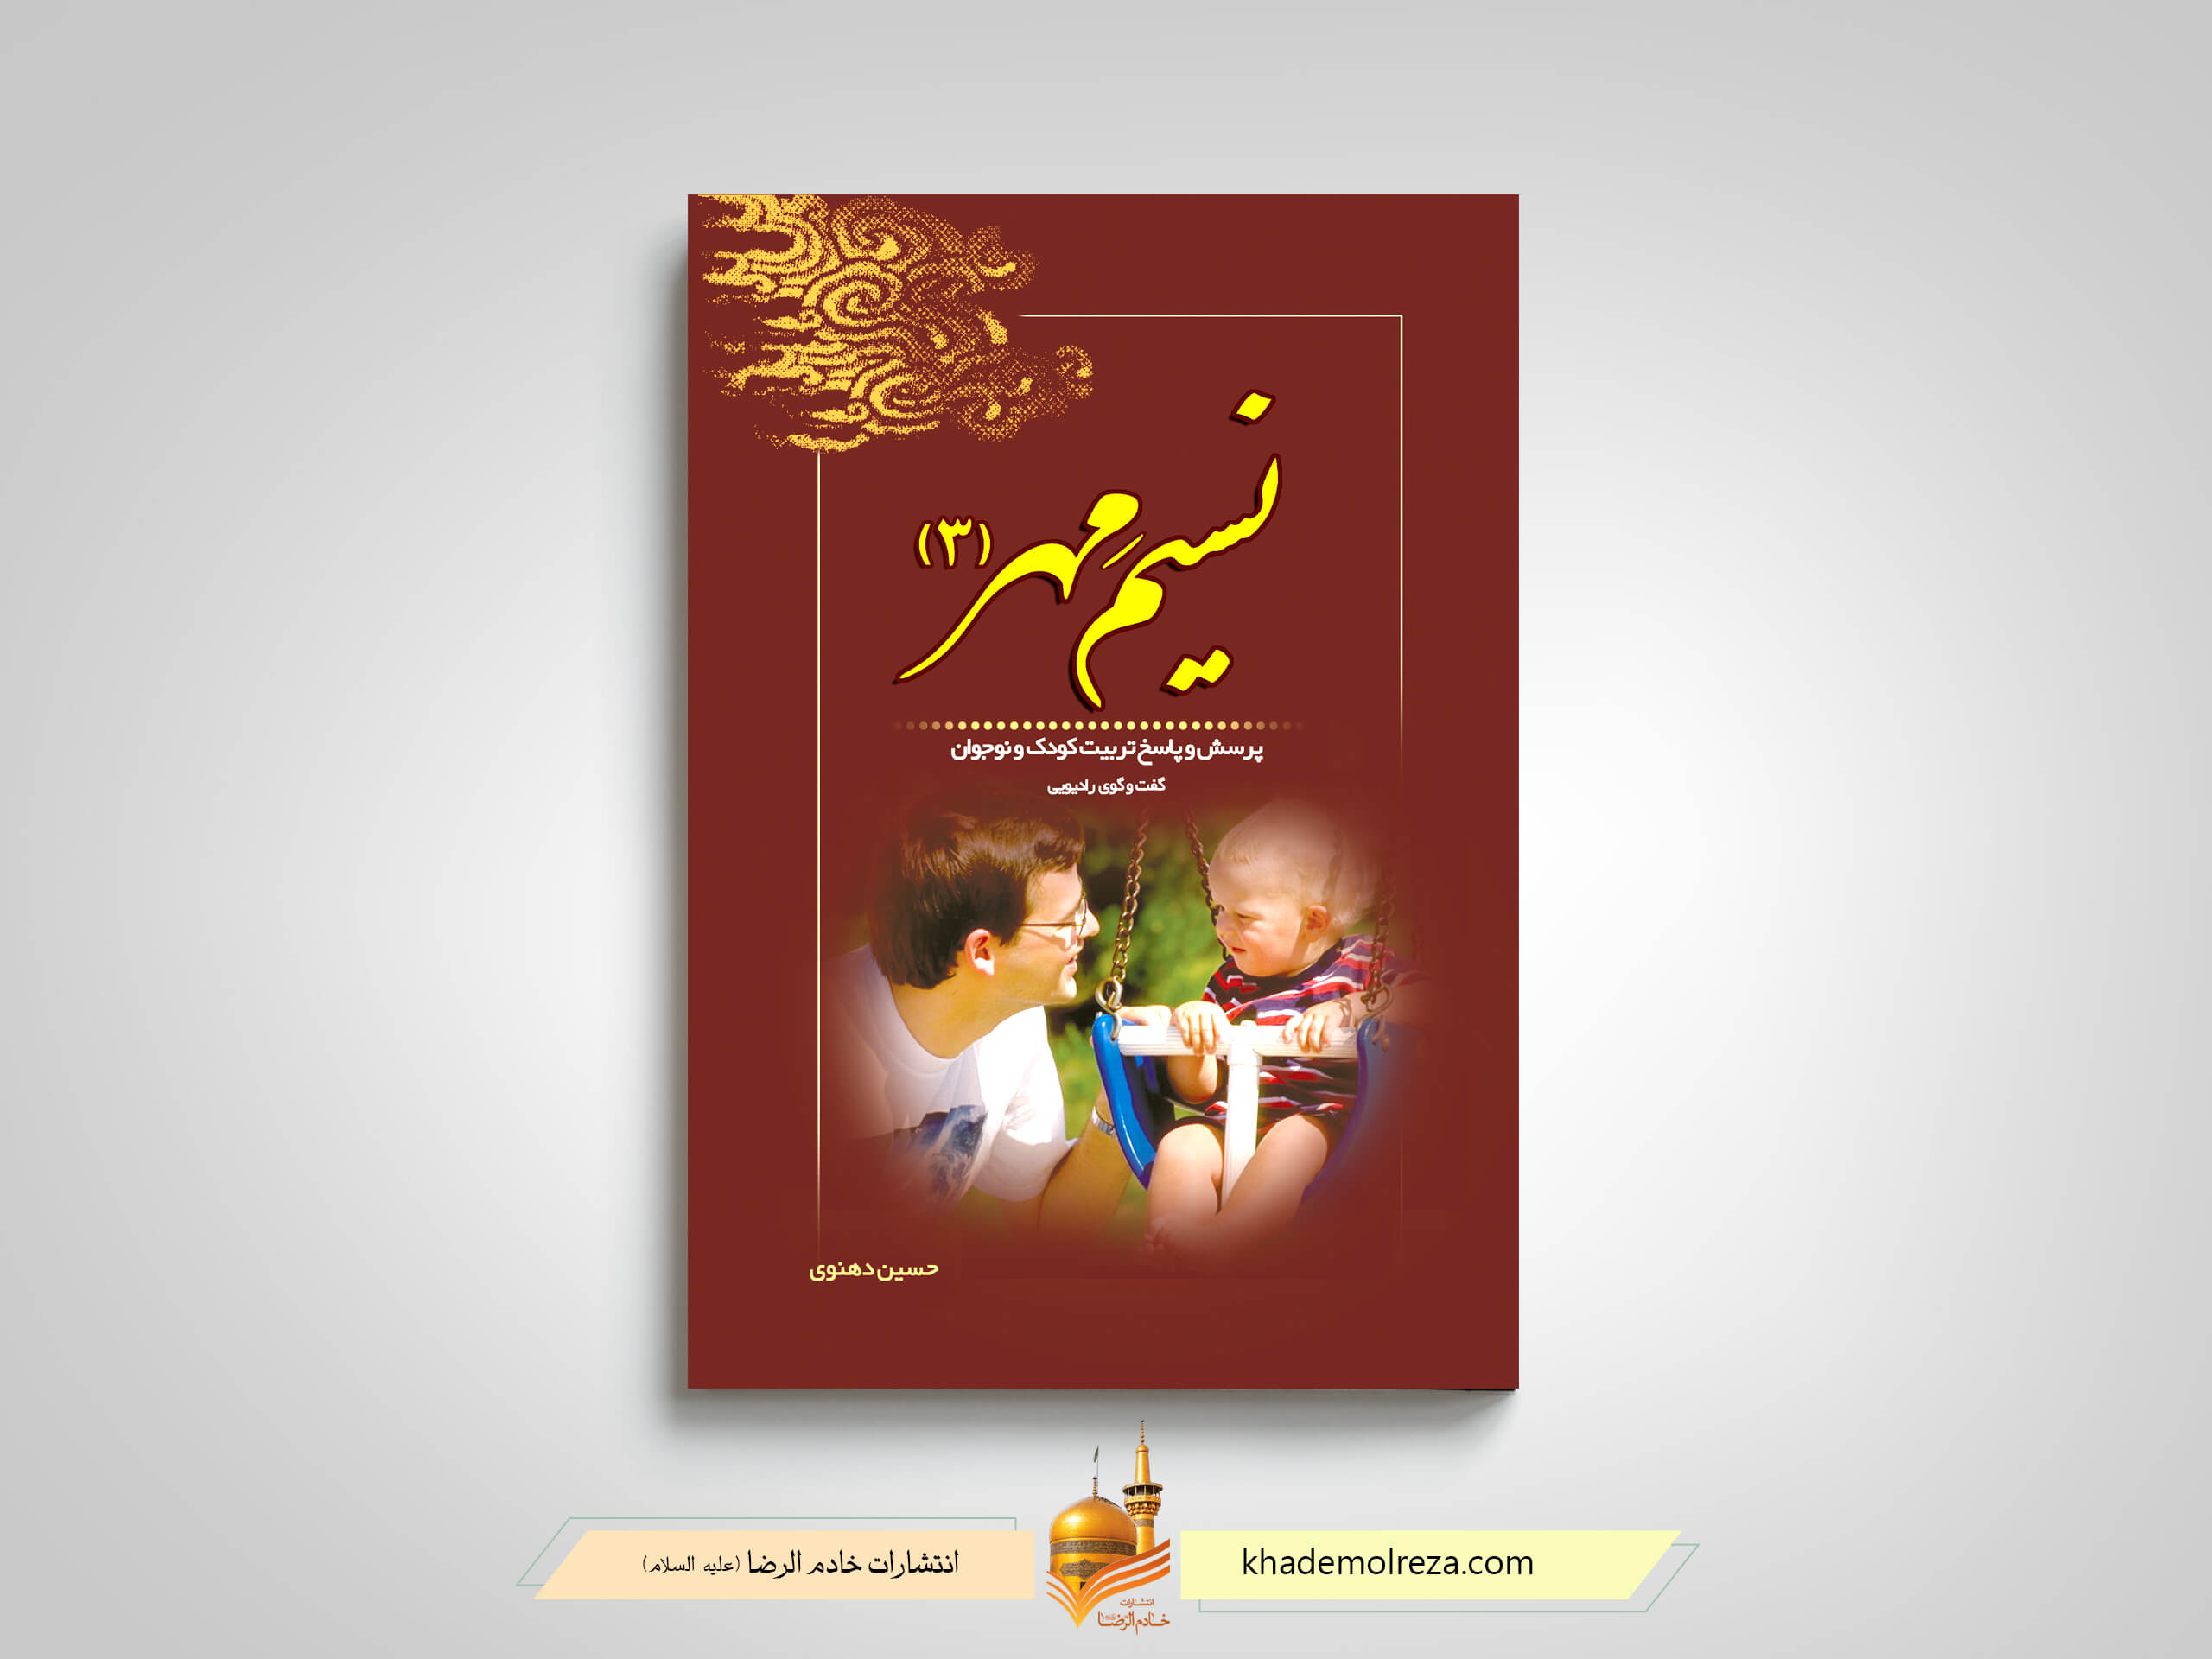 کتاب نسیم مهر جلد سوم